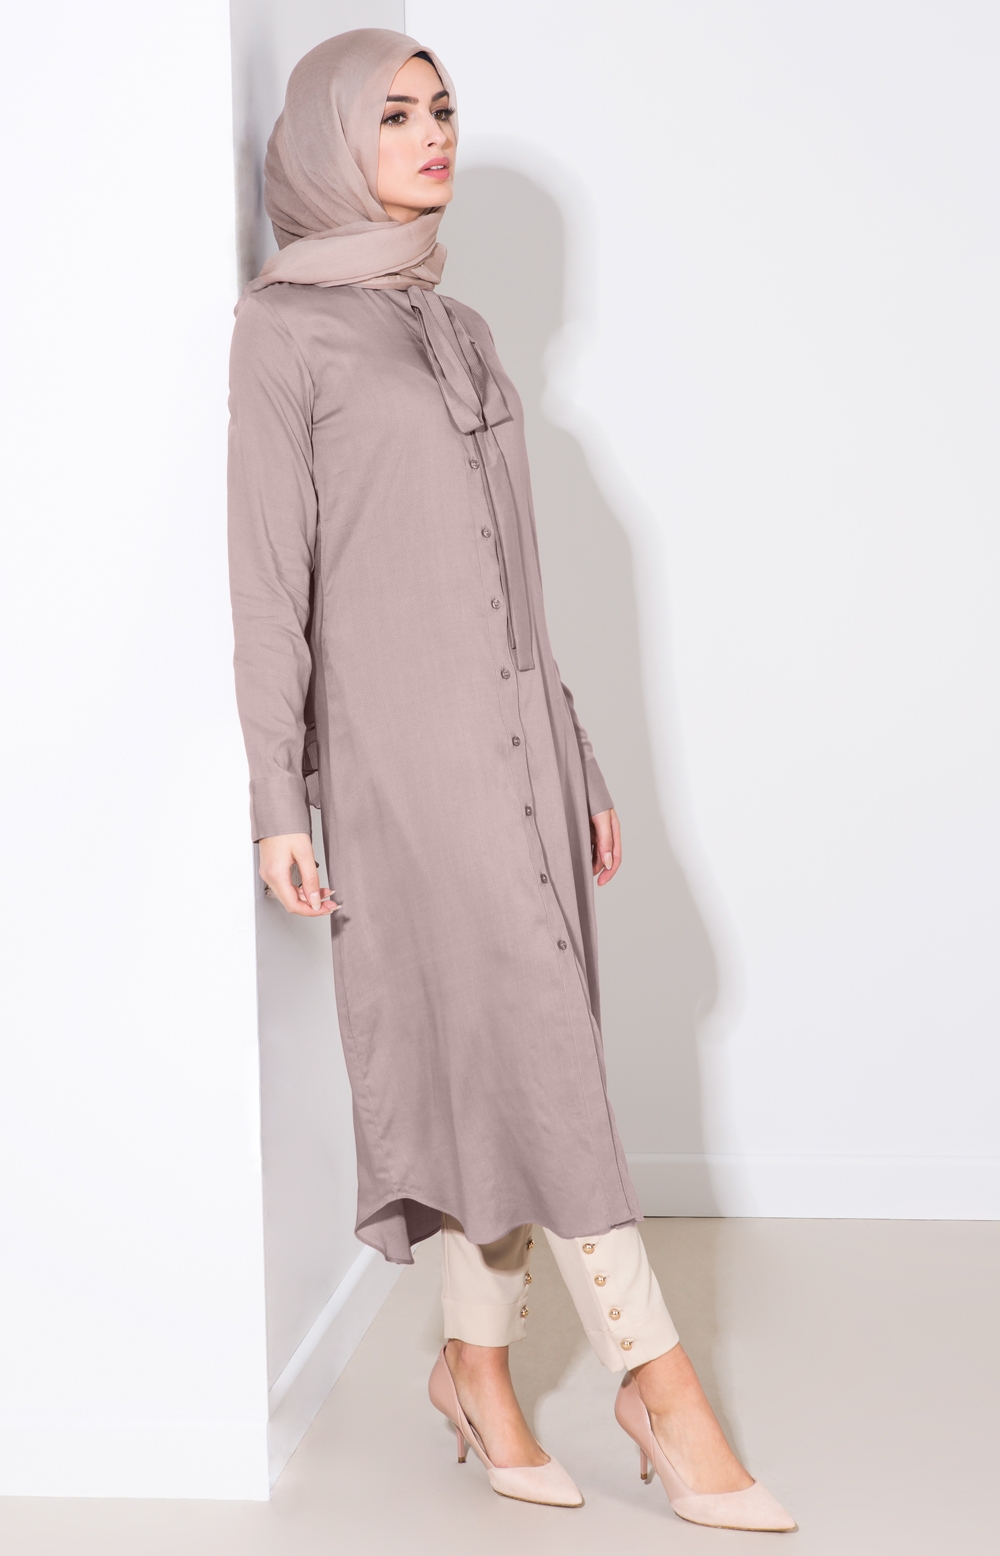  Model Hijab Terbaru 1 Jpg newhairstylesformen2014 com